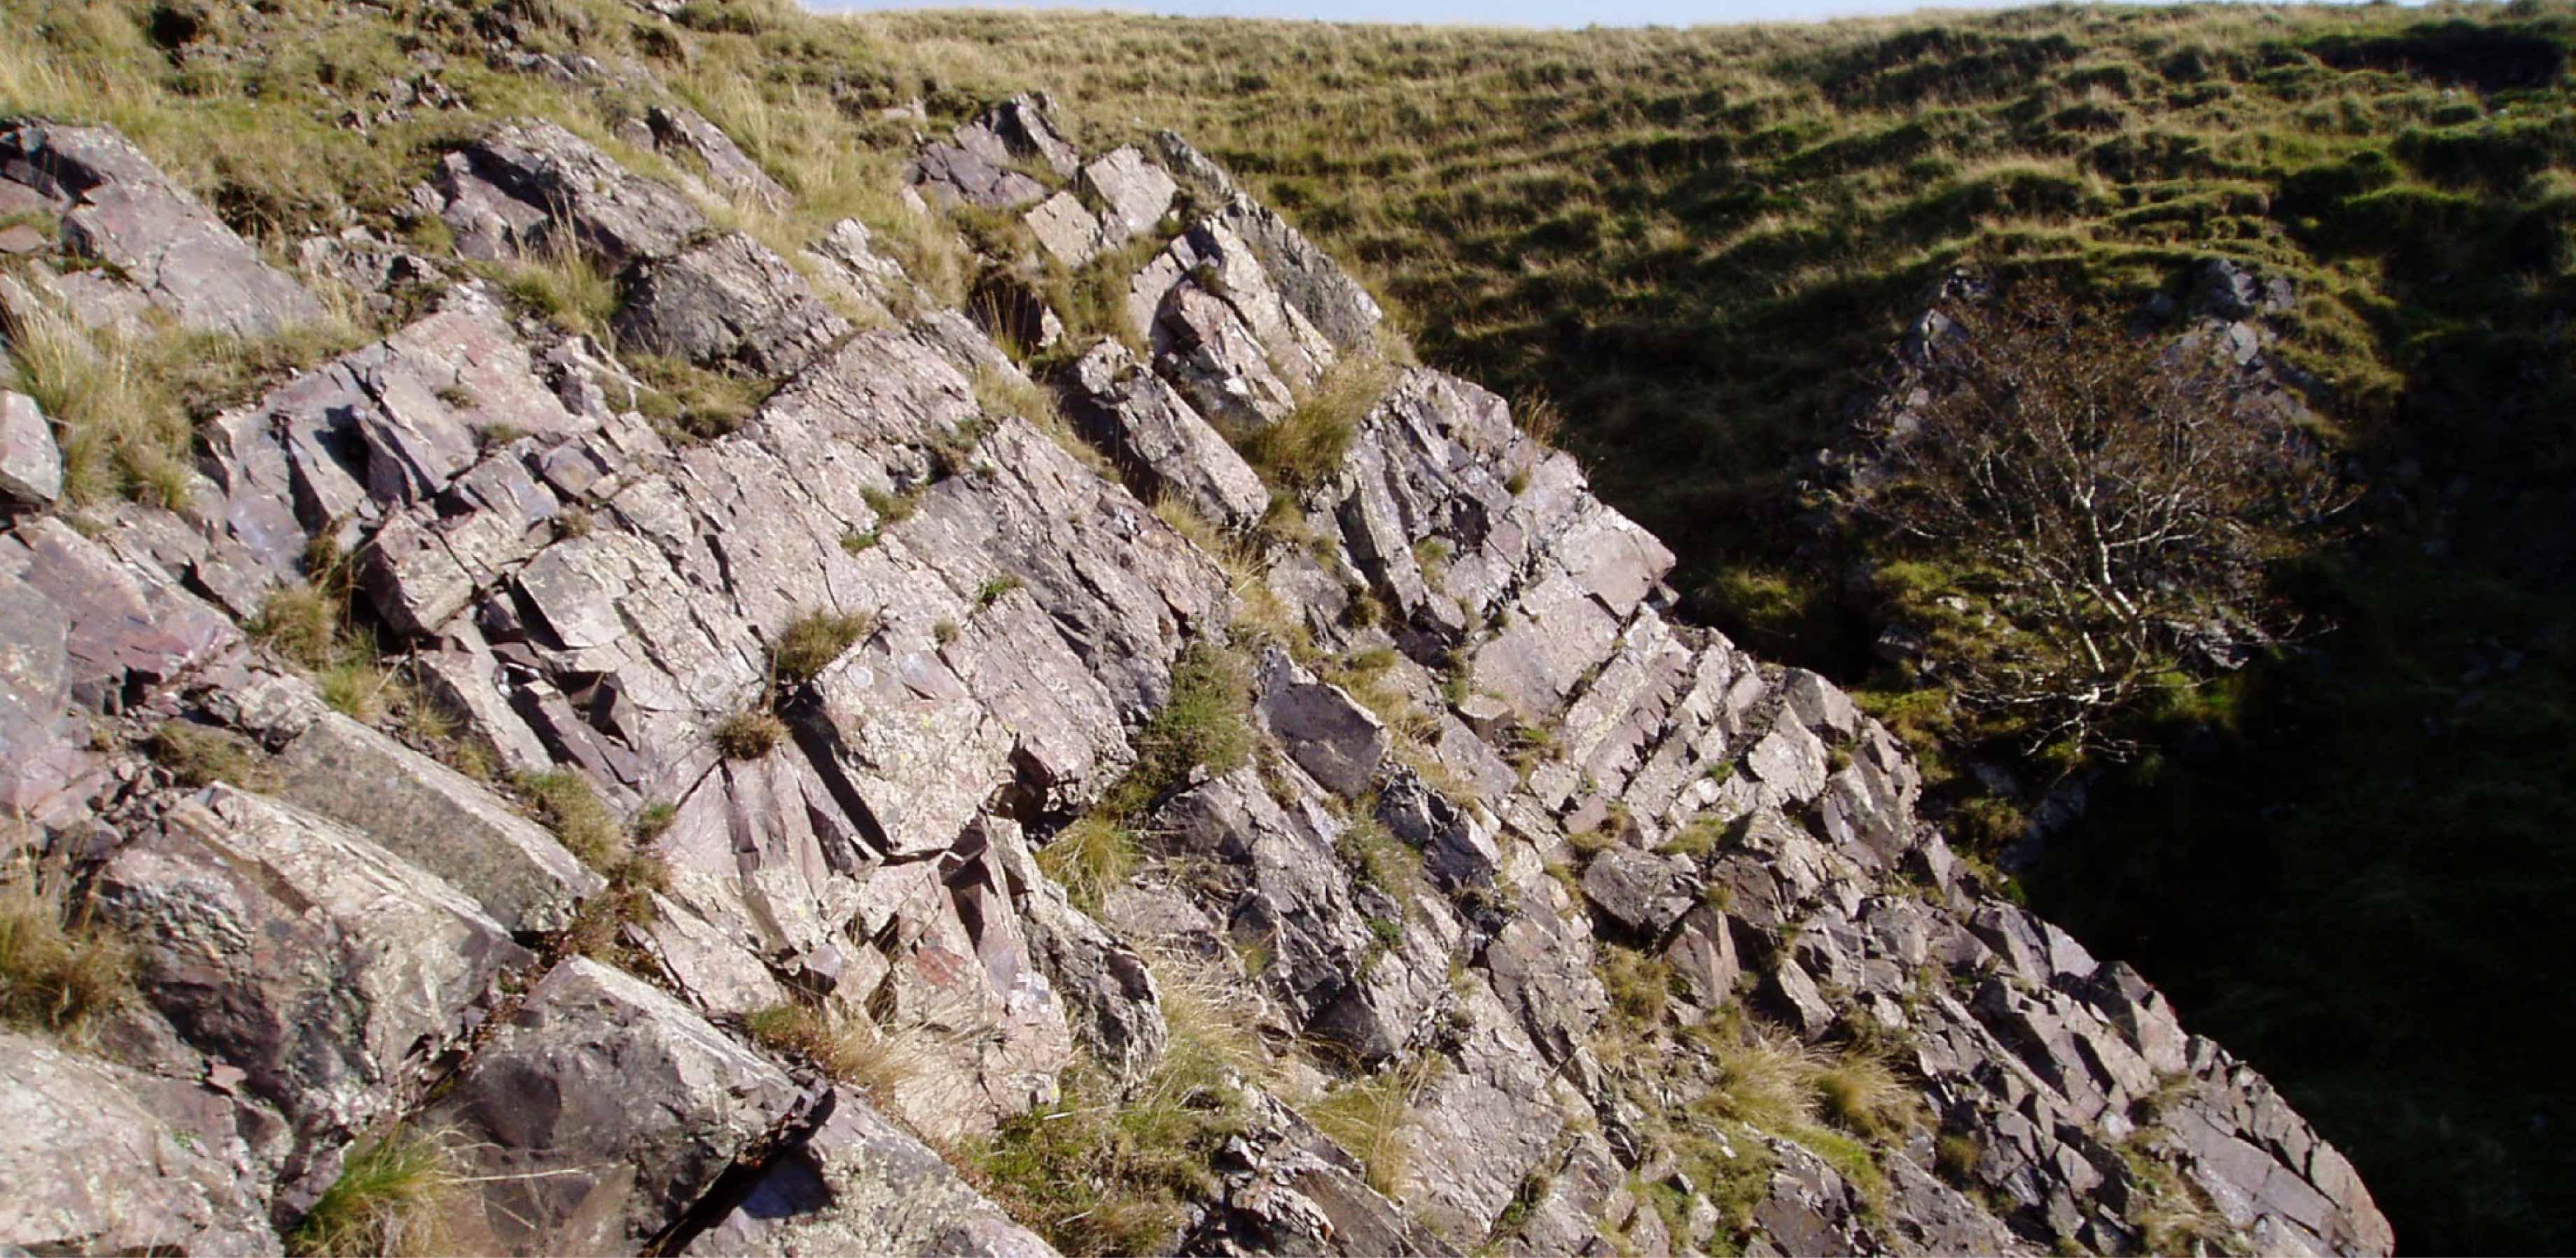 Photos shows stripey grey rocks in layers running horizontally